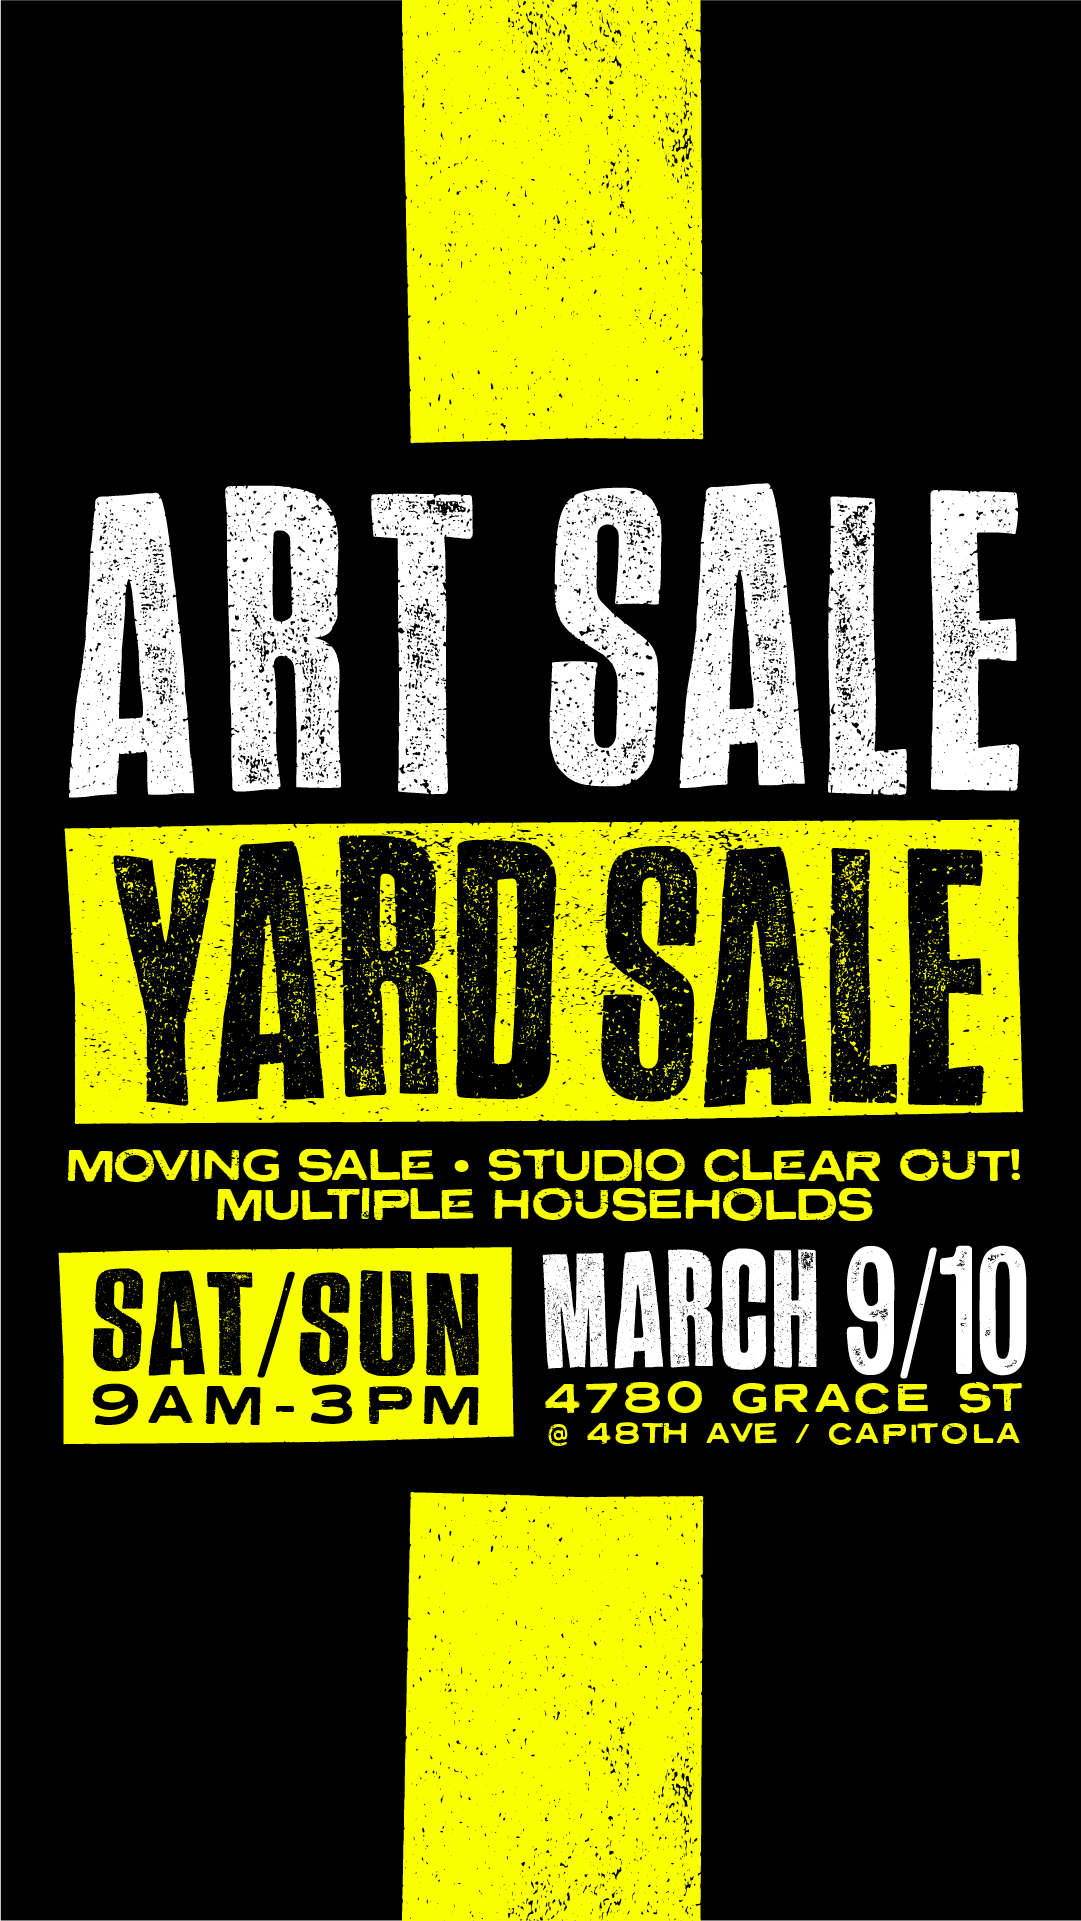 Art Sale / Studio Sale all weekend in Capitola